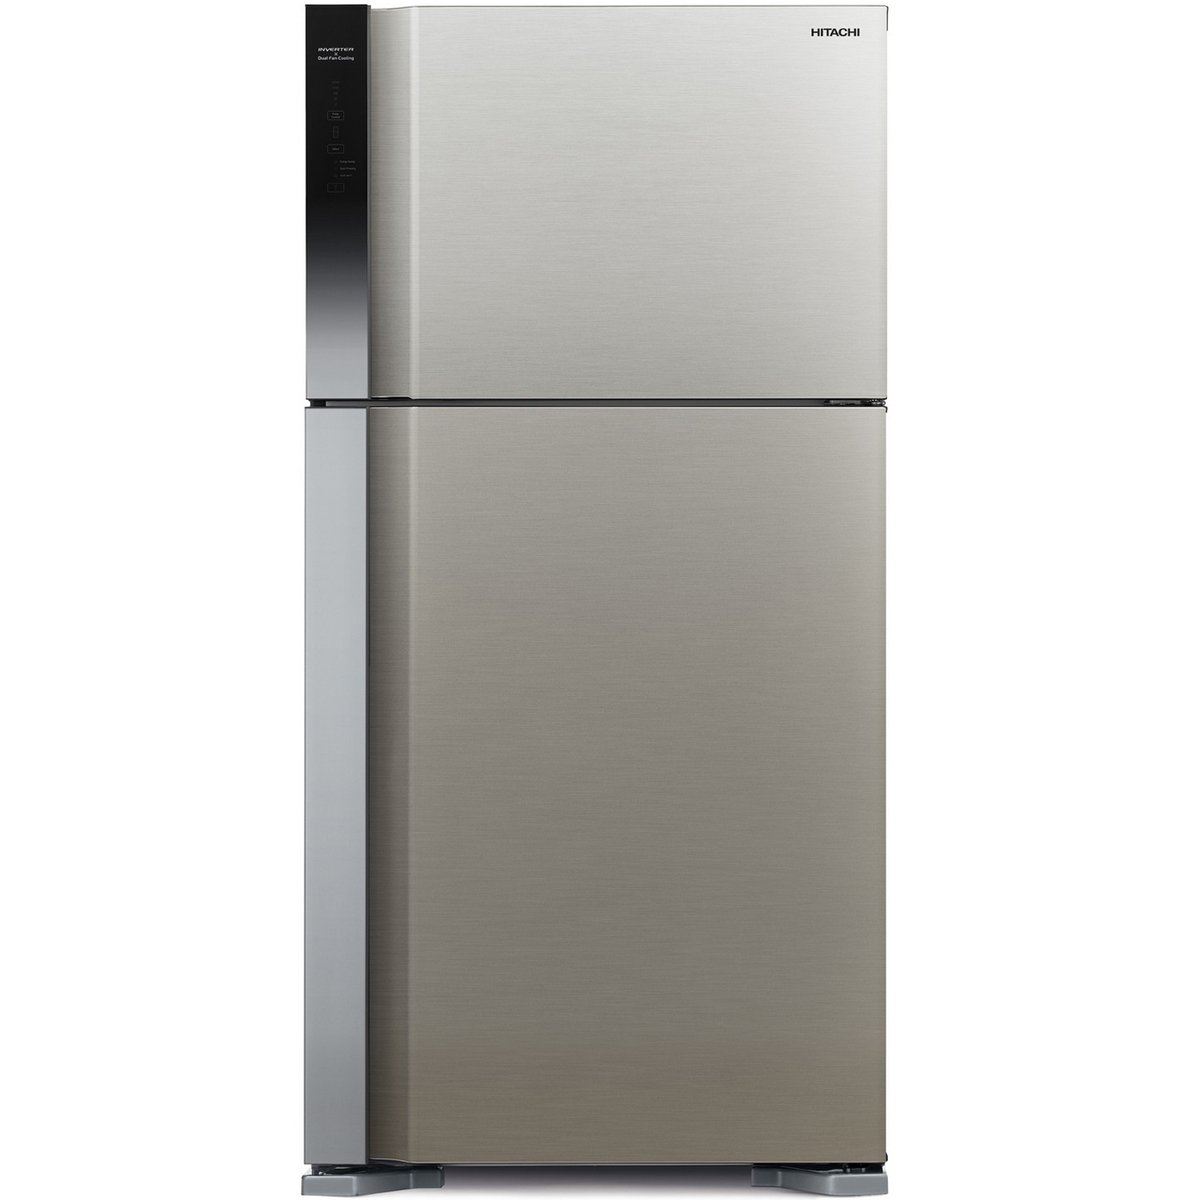 Hitachi Double Door Refrigerator RV710BSL 600Ltr